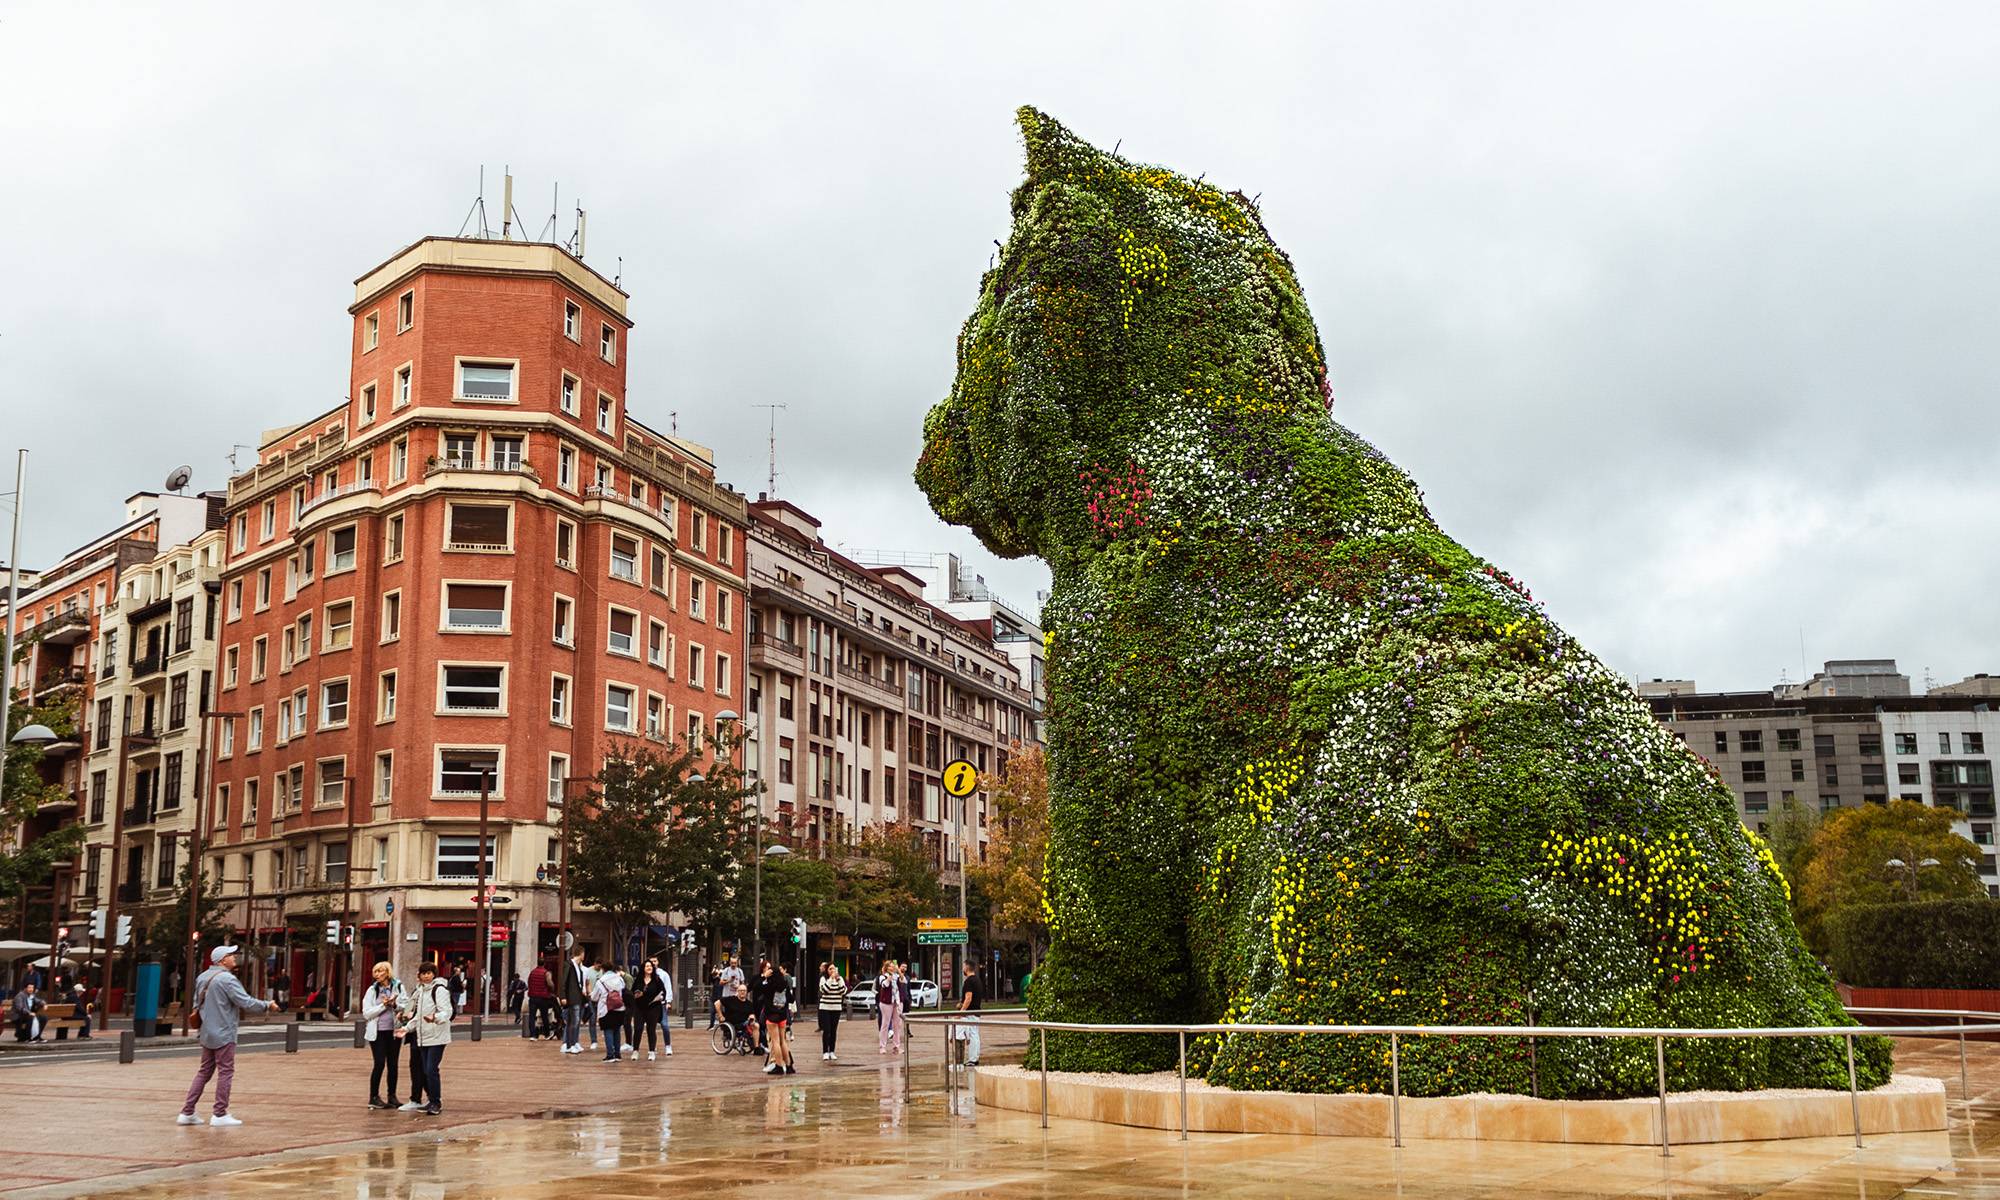 Puppy statue by Jeff Koons in Bilbao